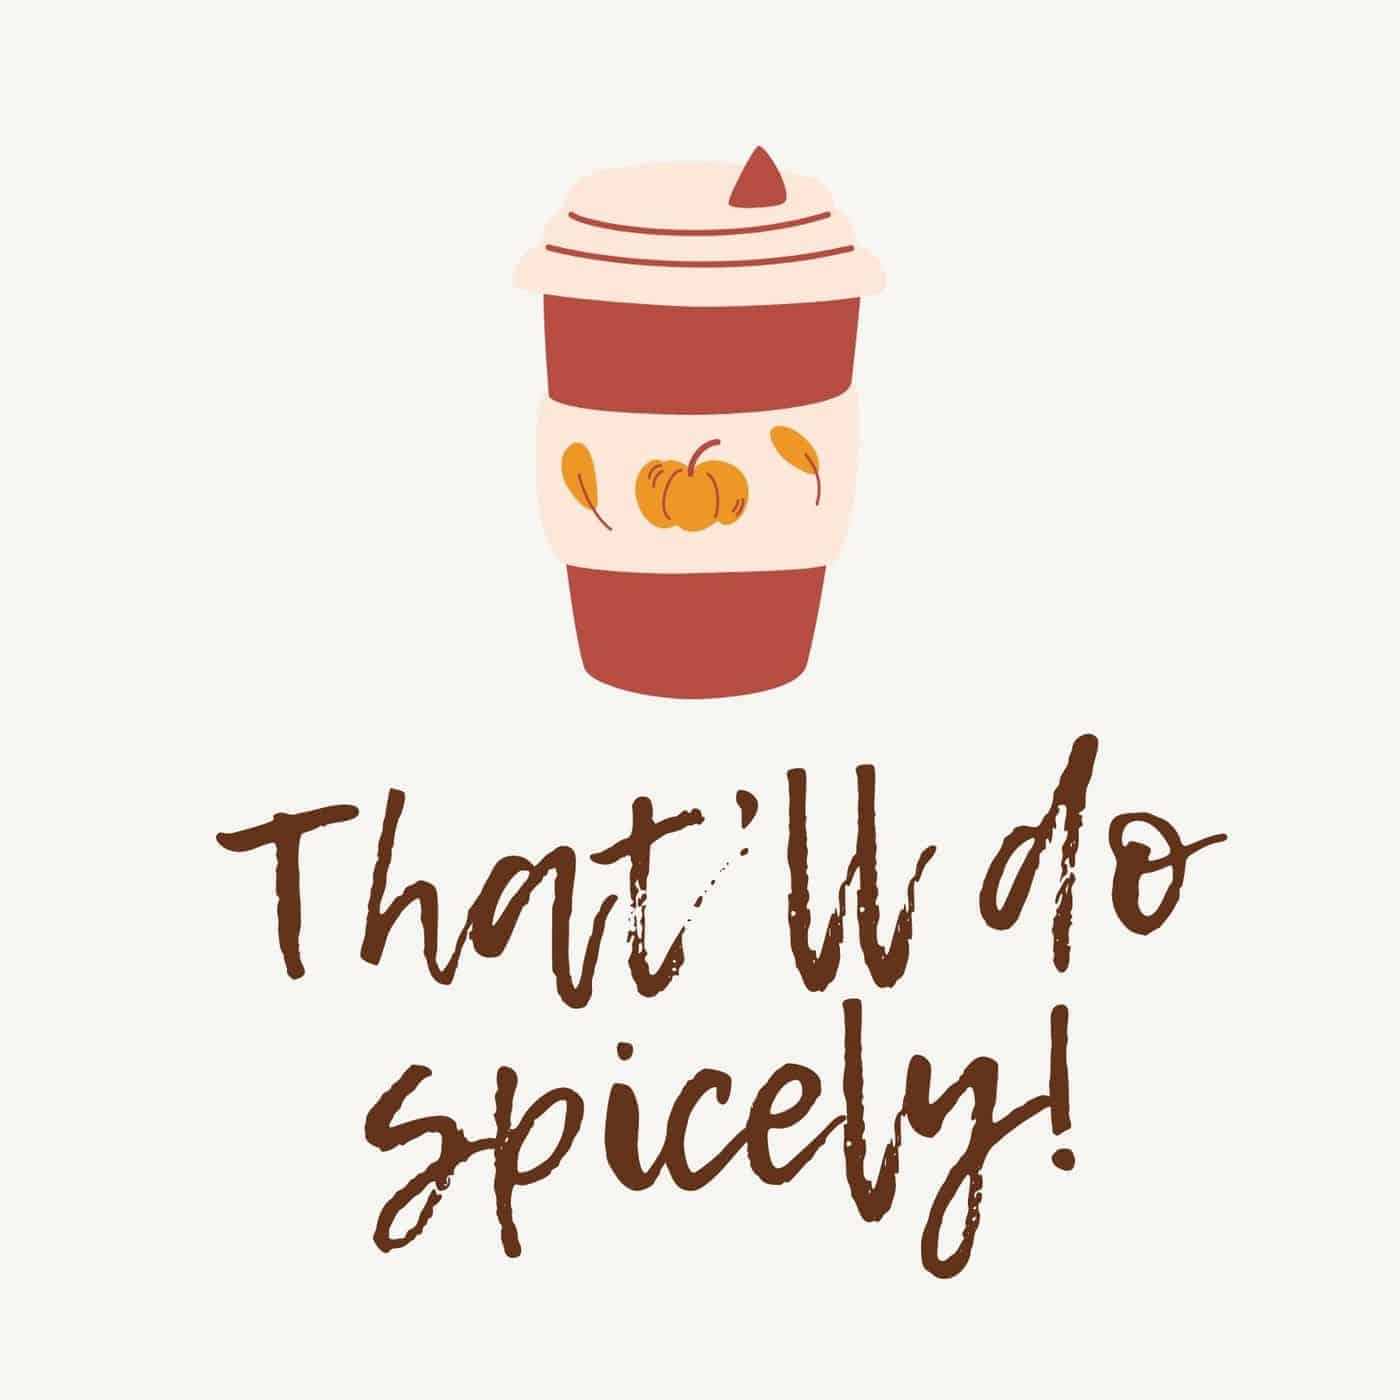 That’ll do spicely! - pumpkin spice latte jokes for instagram - home for the harvest blog